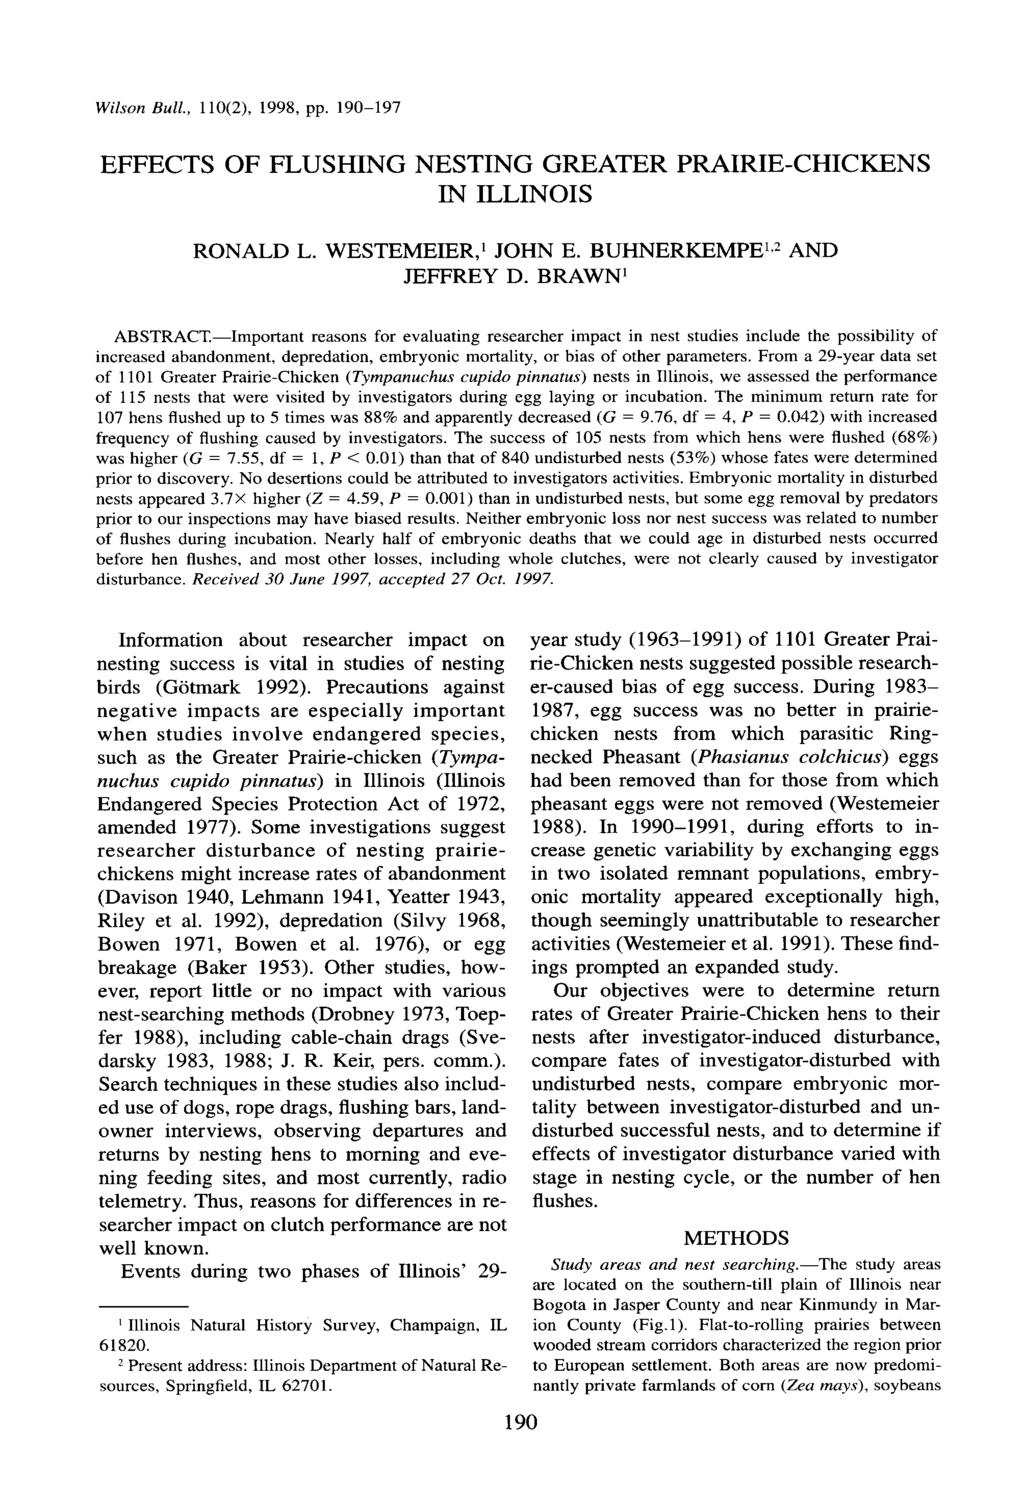 Wilson Bull., 110(2), 1998, pp. 190-197 EFFECTS OF FLUSHING NESTING GREATER PRAIRIE-CHICKENS IN ILLINOIS RONALD L. WESTEMEIER, JOHN E. BUHNERKEMPE,2 AND JEFFREY D.